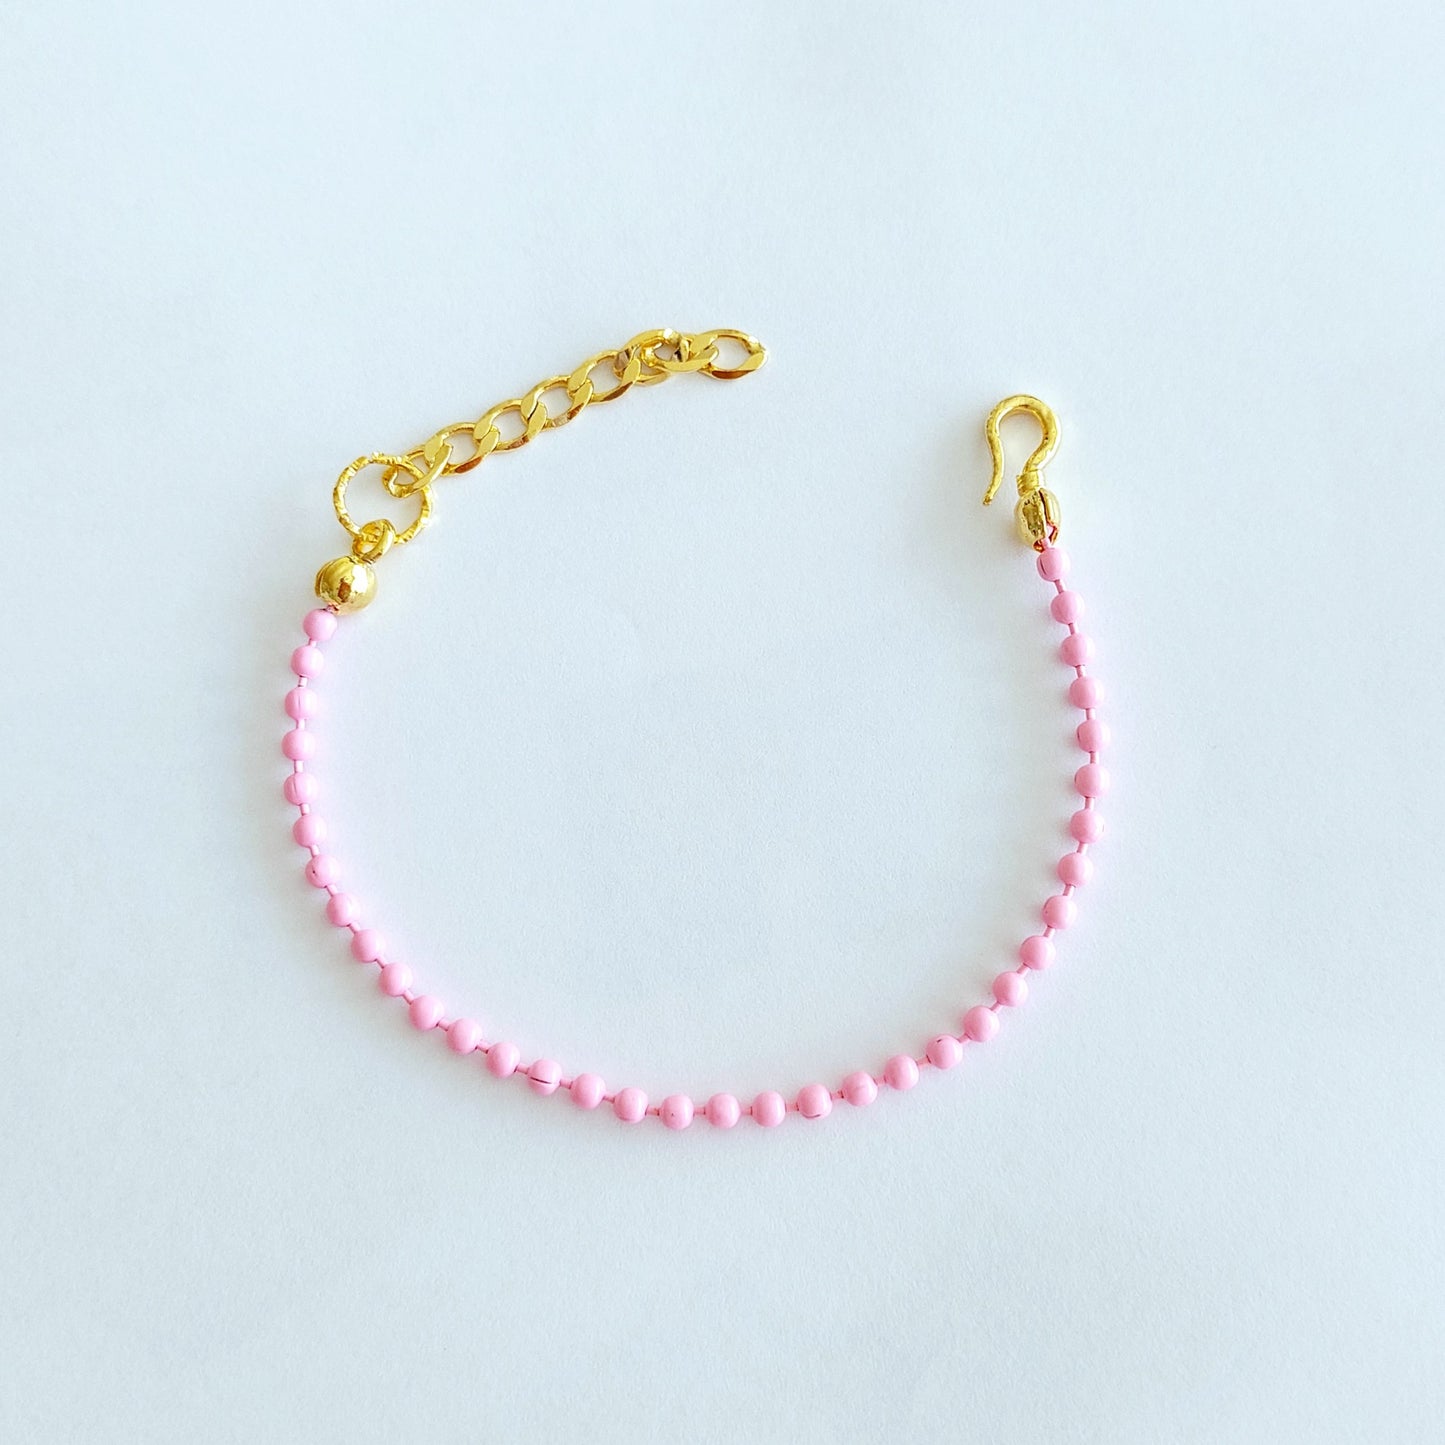 Blue Lagoon armband - pink